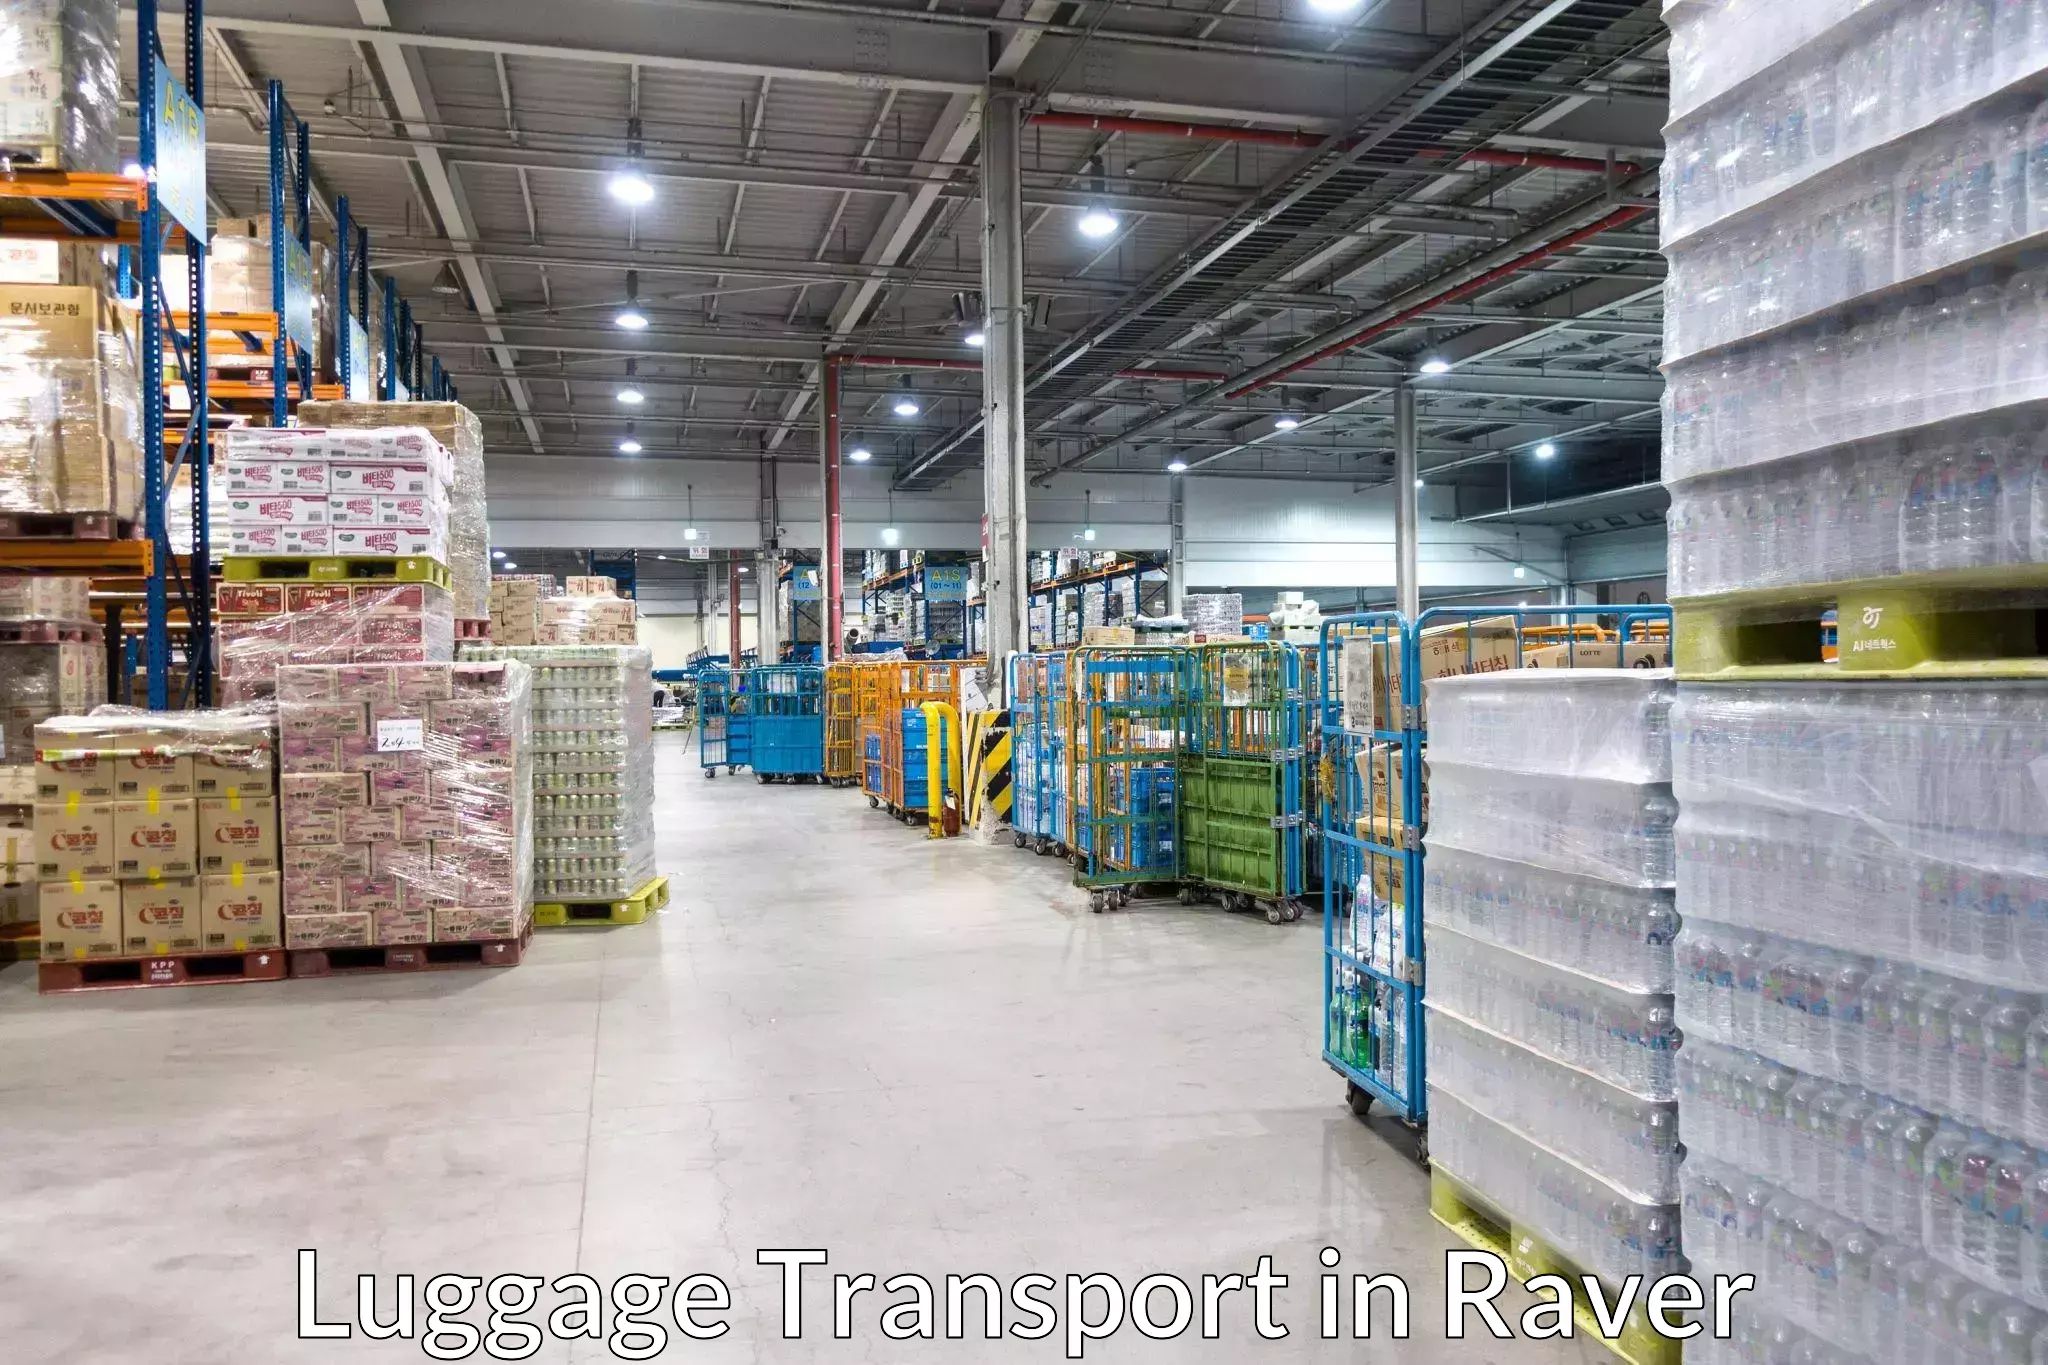 Baggage transport technology in Raver